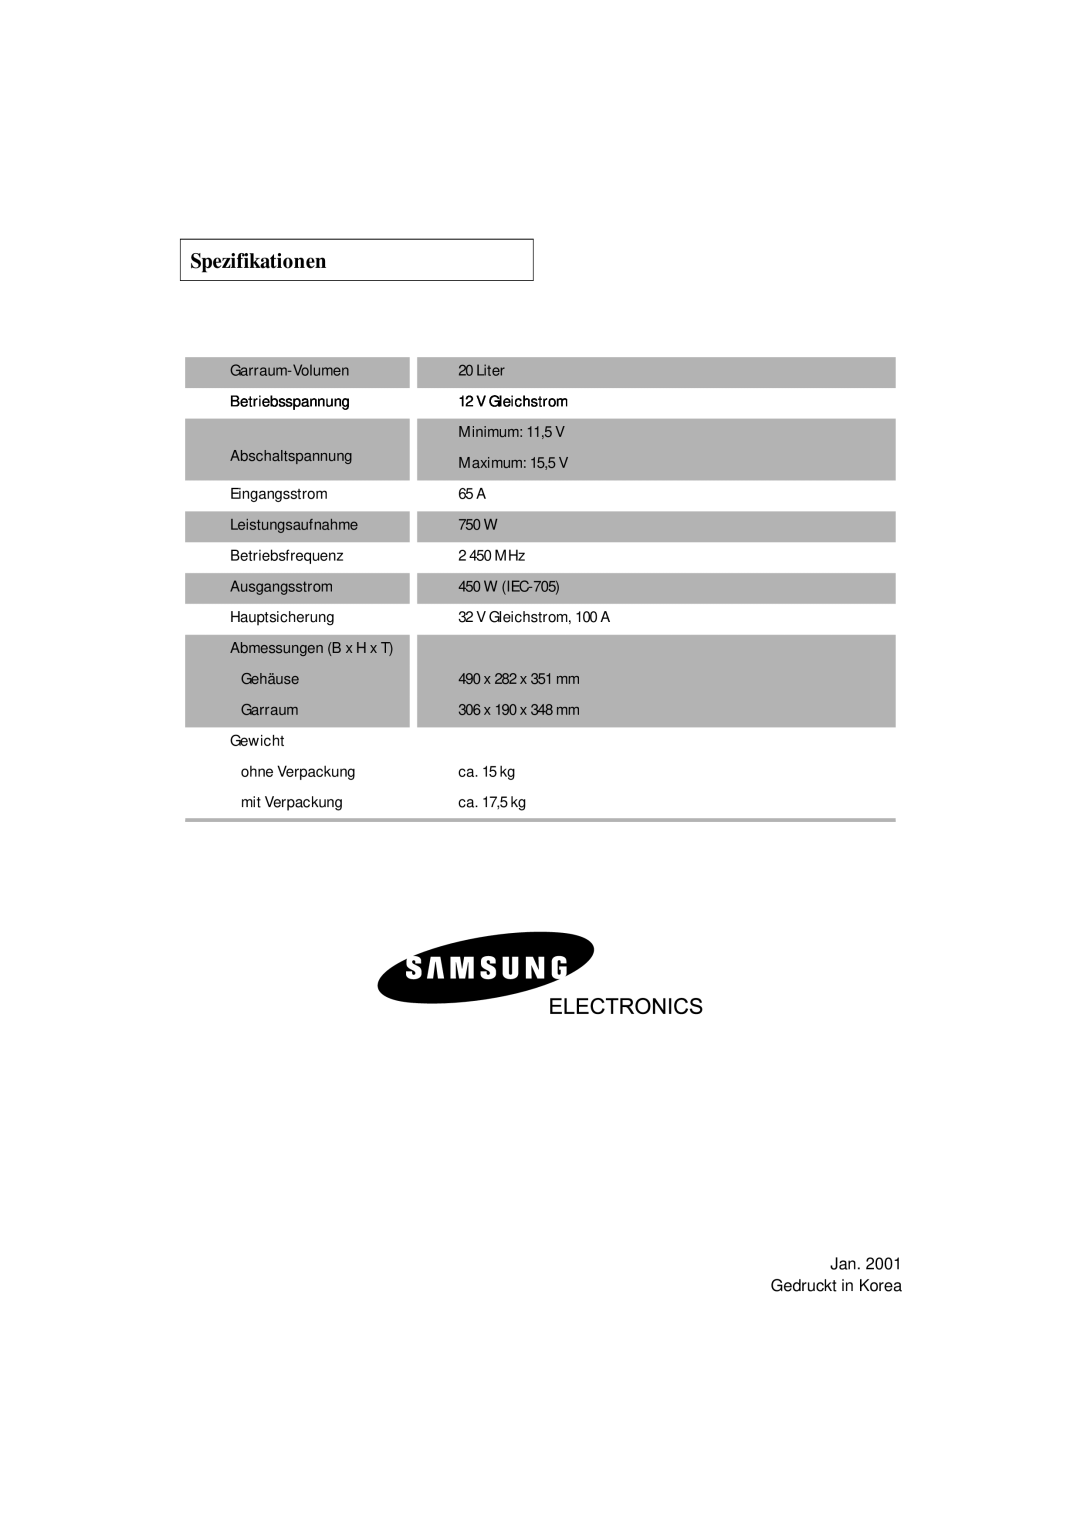 Samsung DE7711 manual Spezifikationen, Jan Gedruckt in Korea 